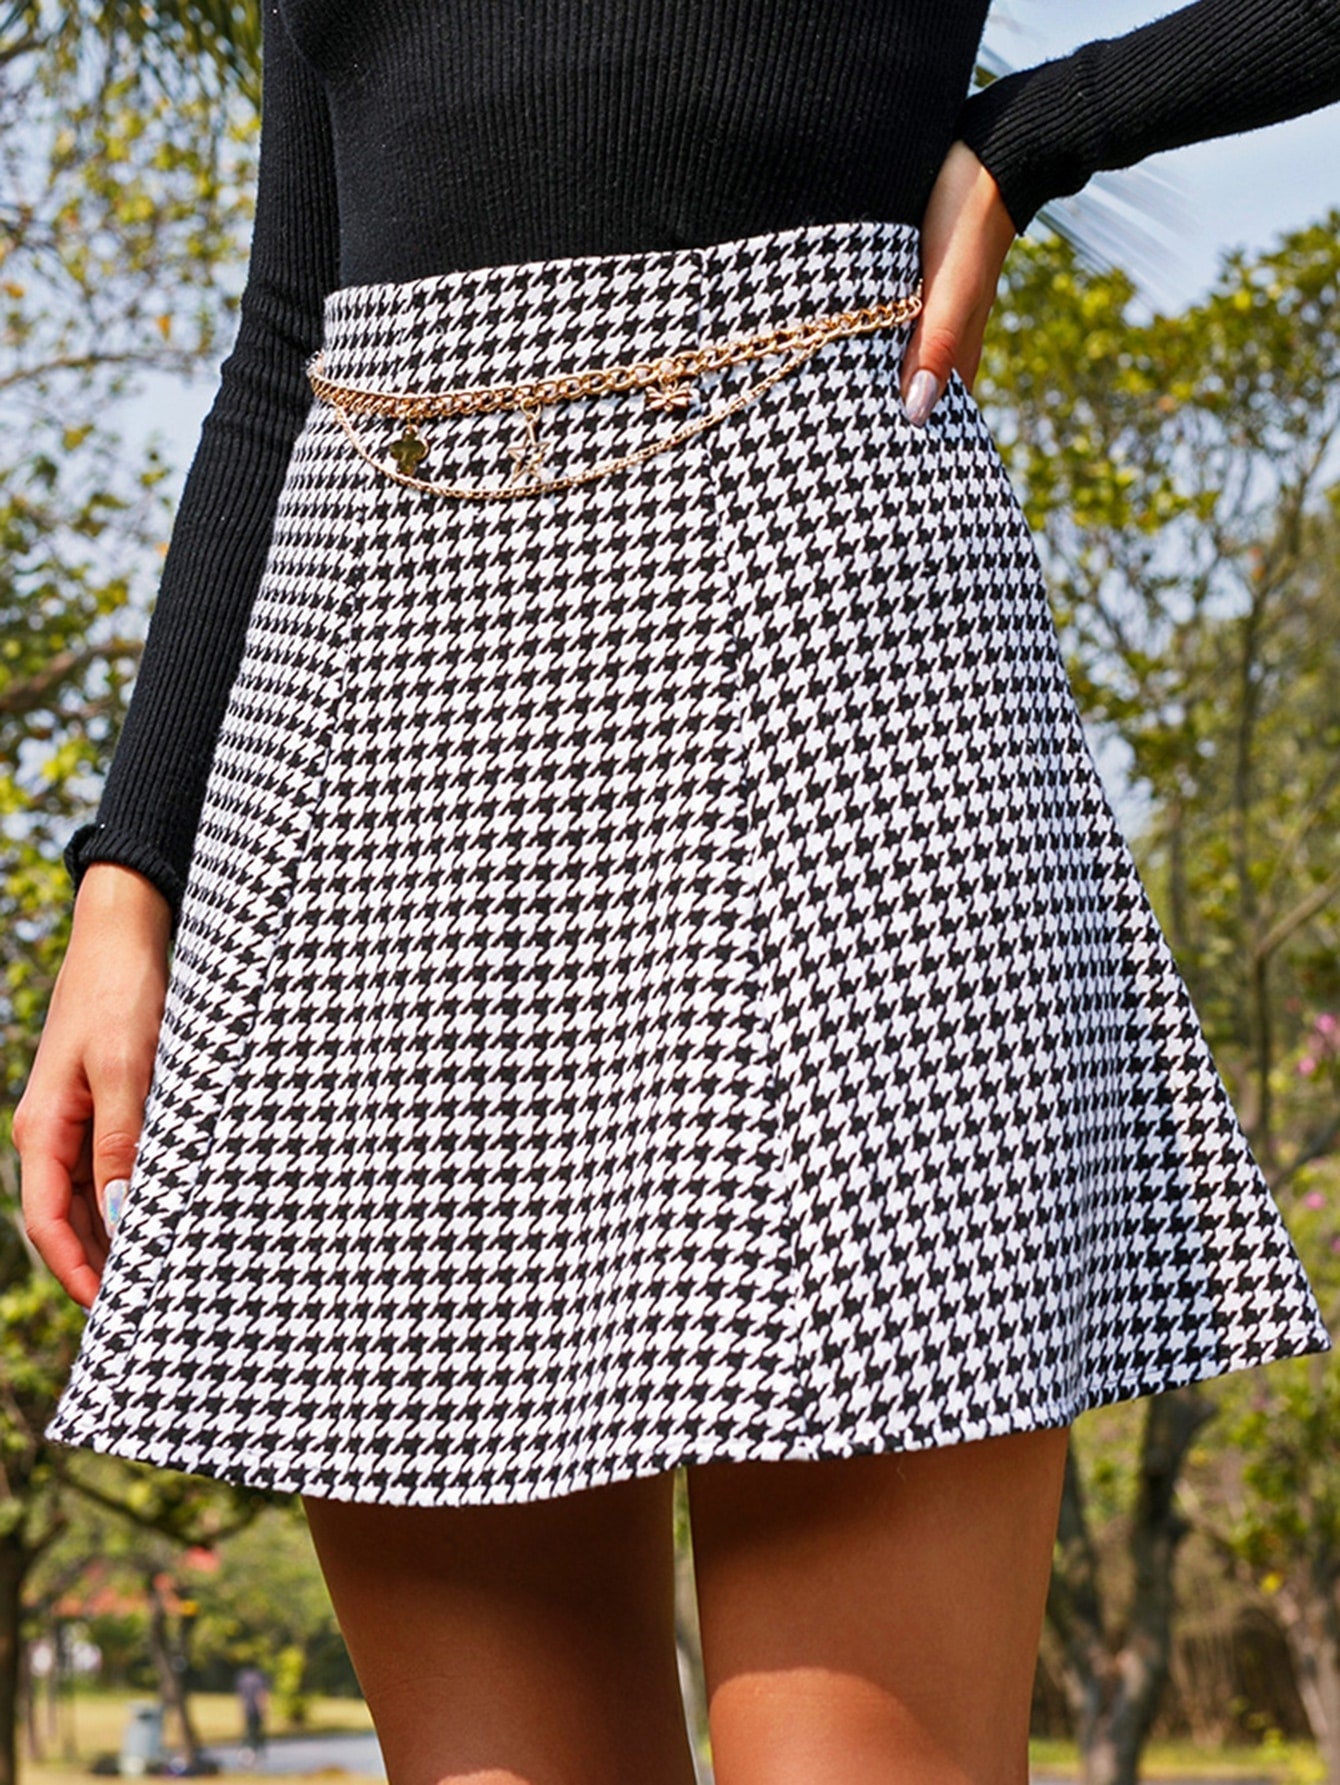 Women's Chain Skirt Fashion All-match Skirt Sai Feel